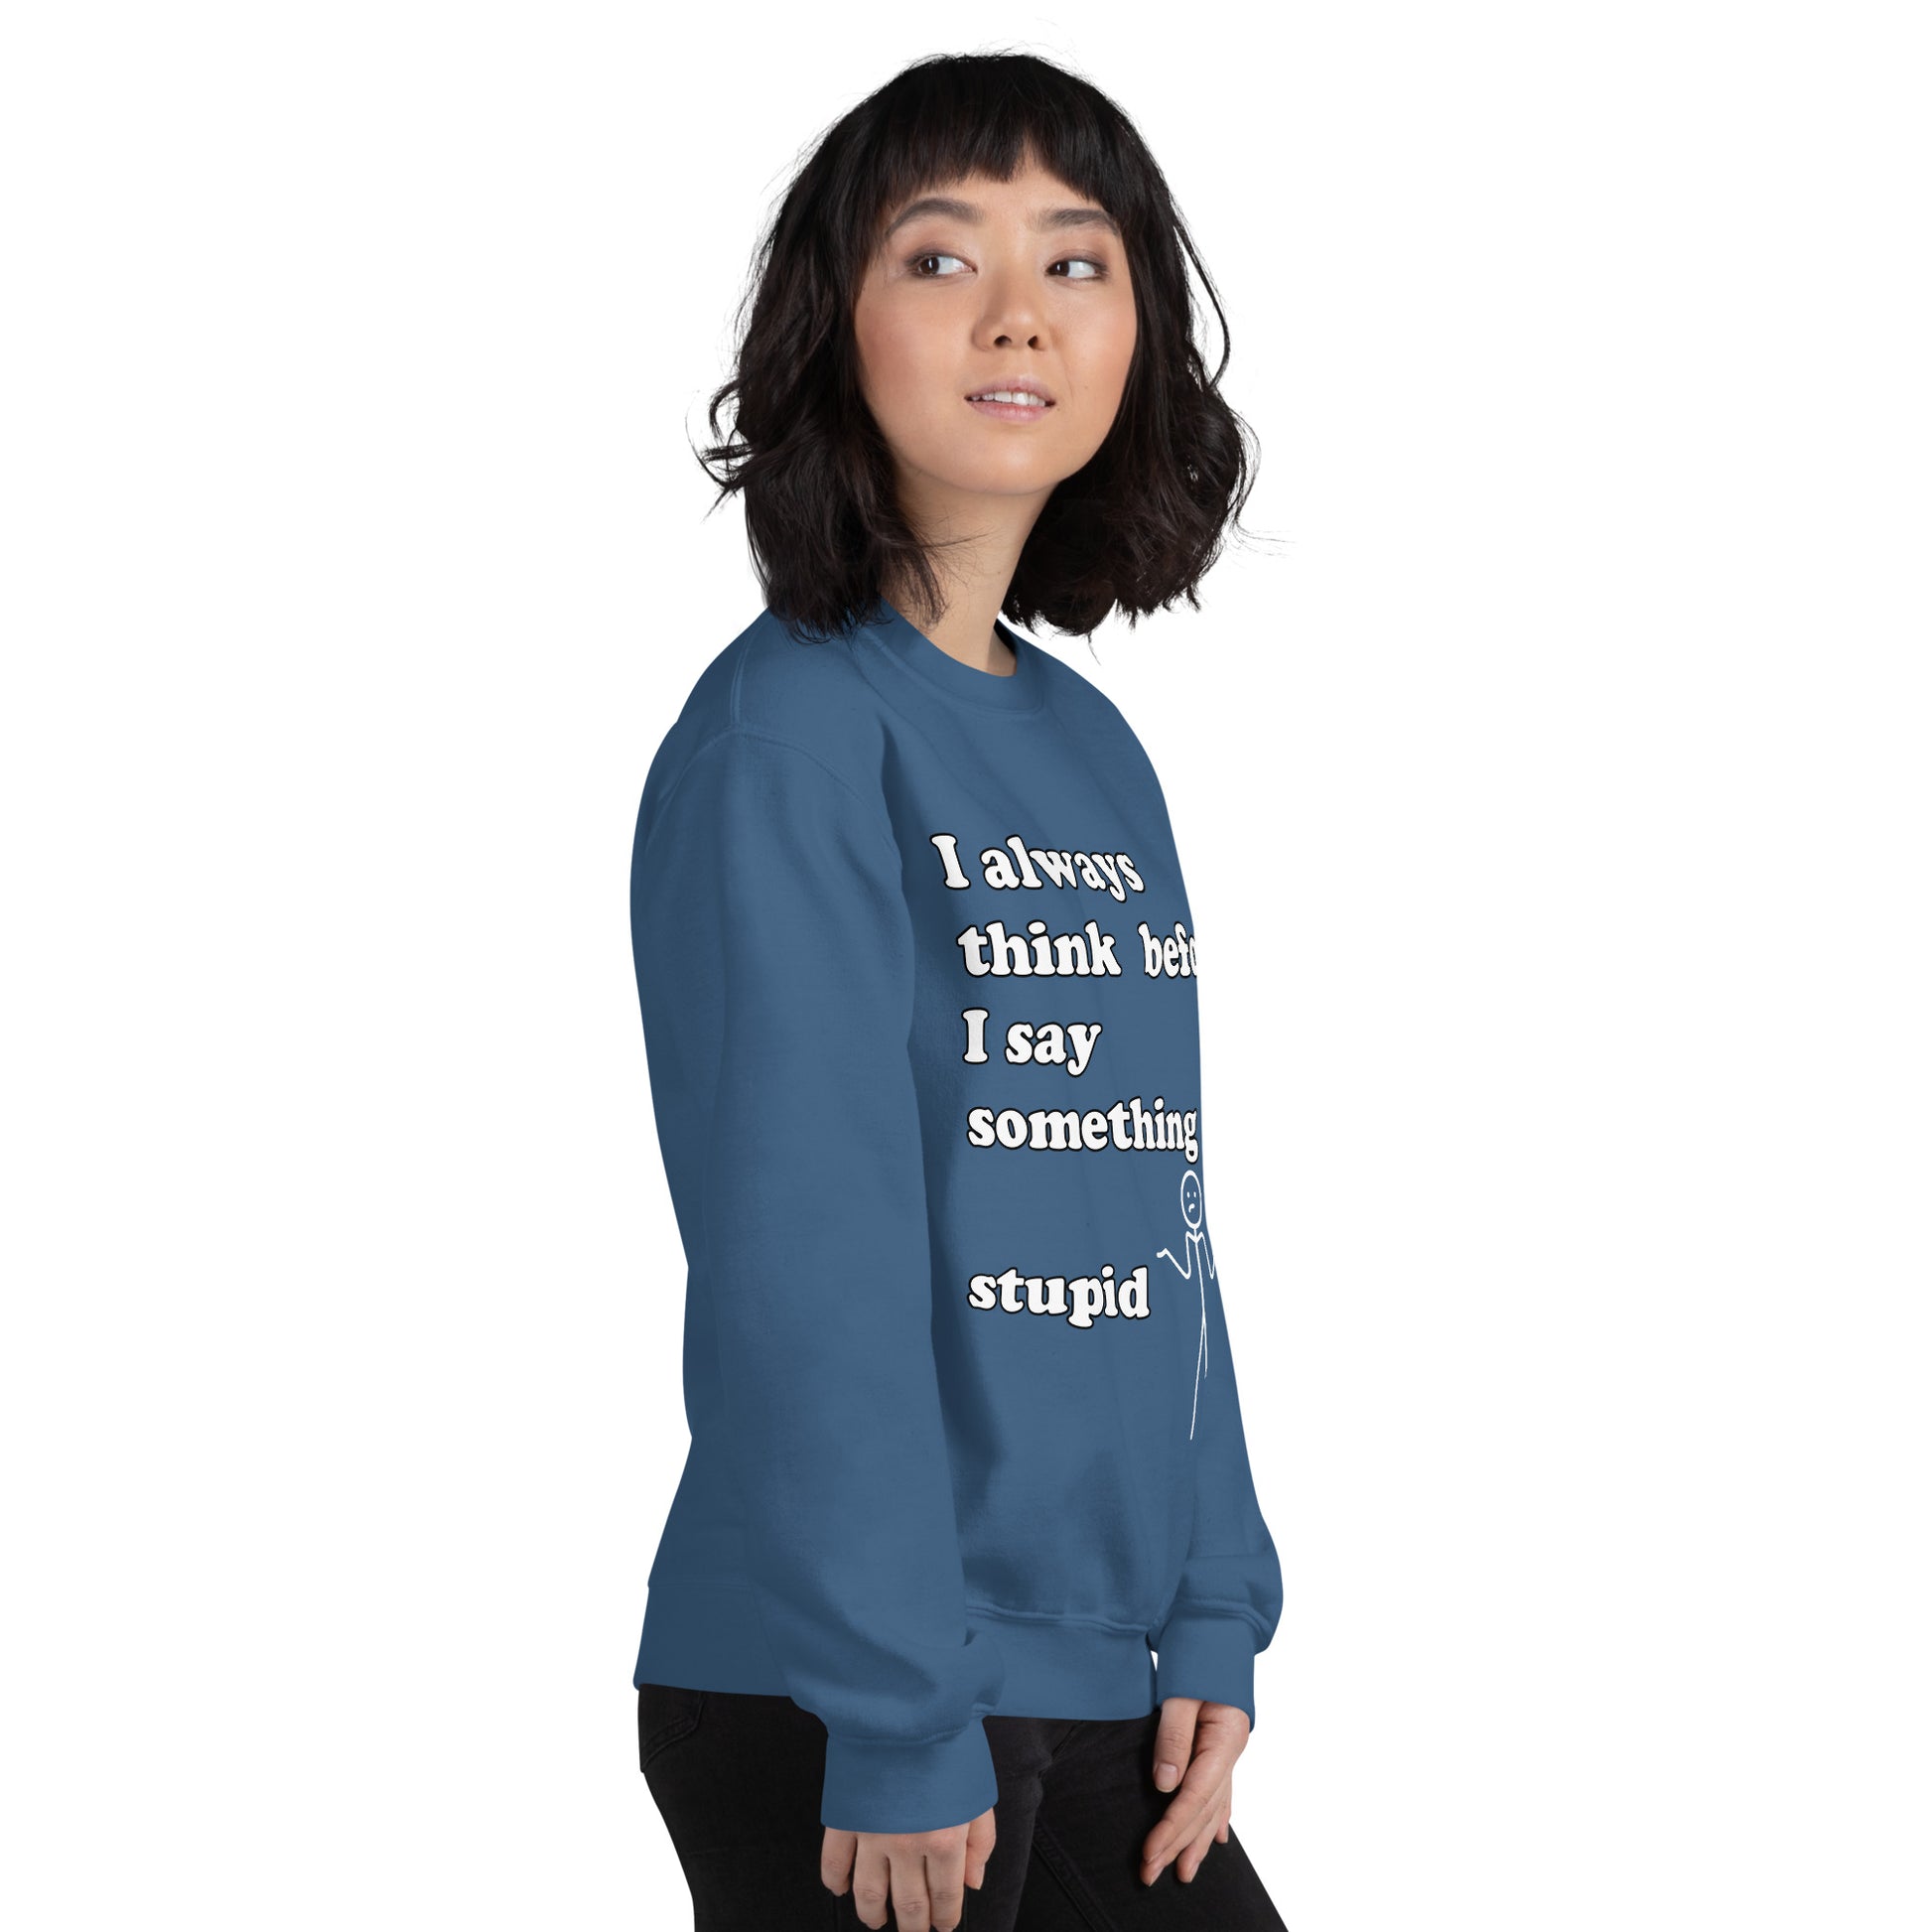 Woman with indigo blue sweatshirt with text "I always think before I say something stupid"